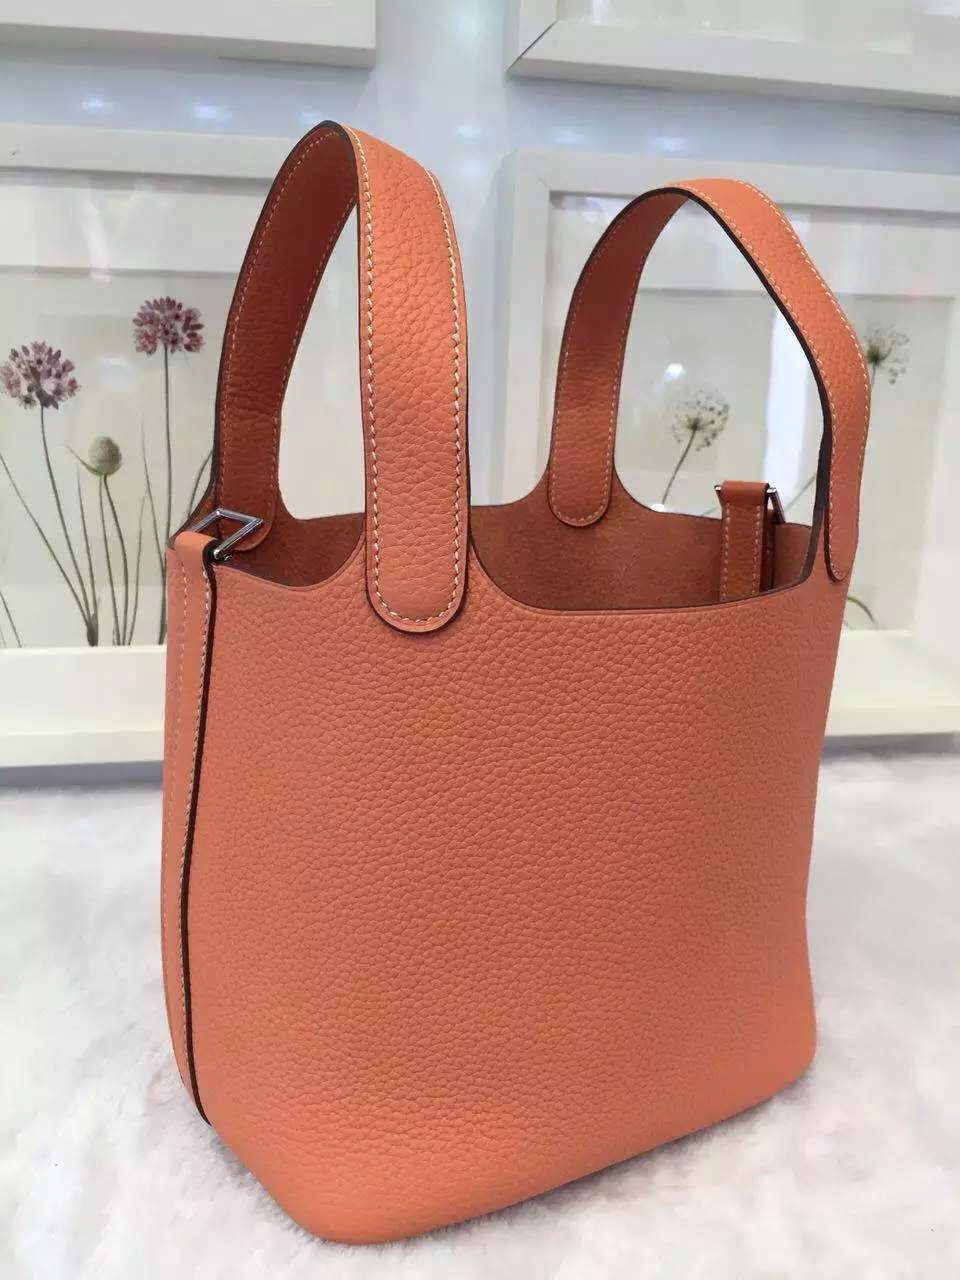 Discount Hermes Picotin Lock Bag France Togo Calfskin Leather in L5 Crevette Pink